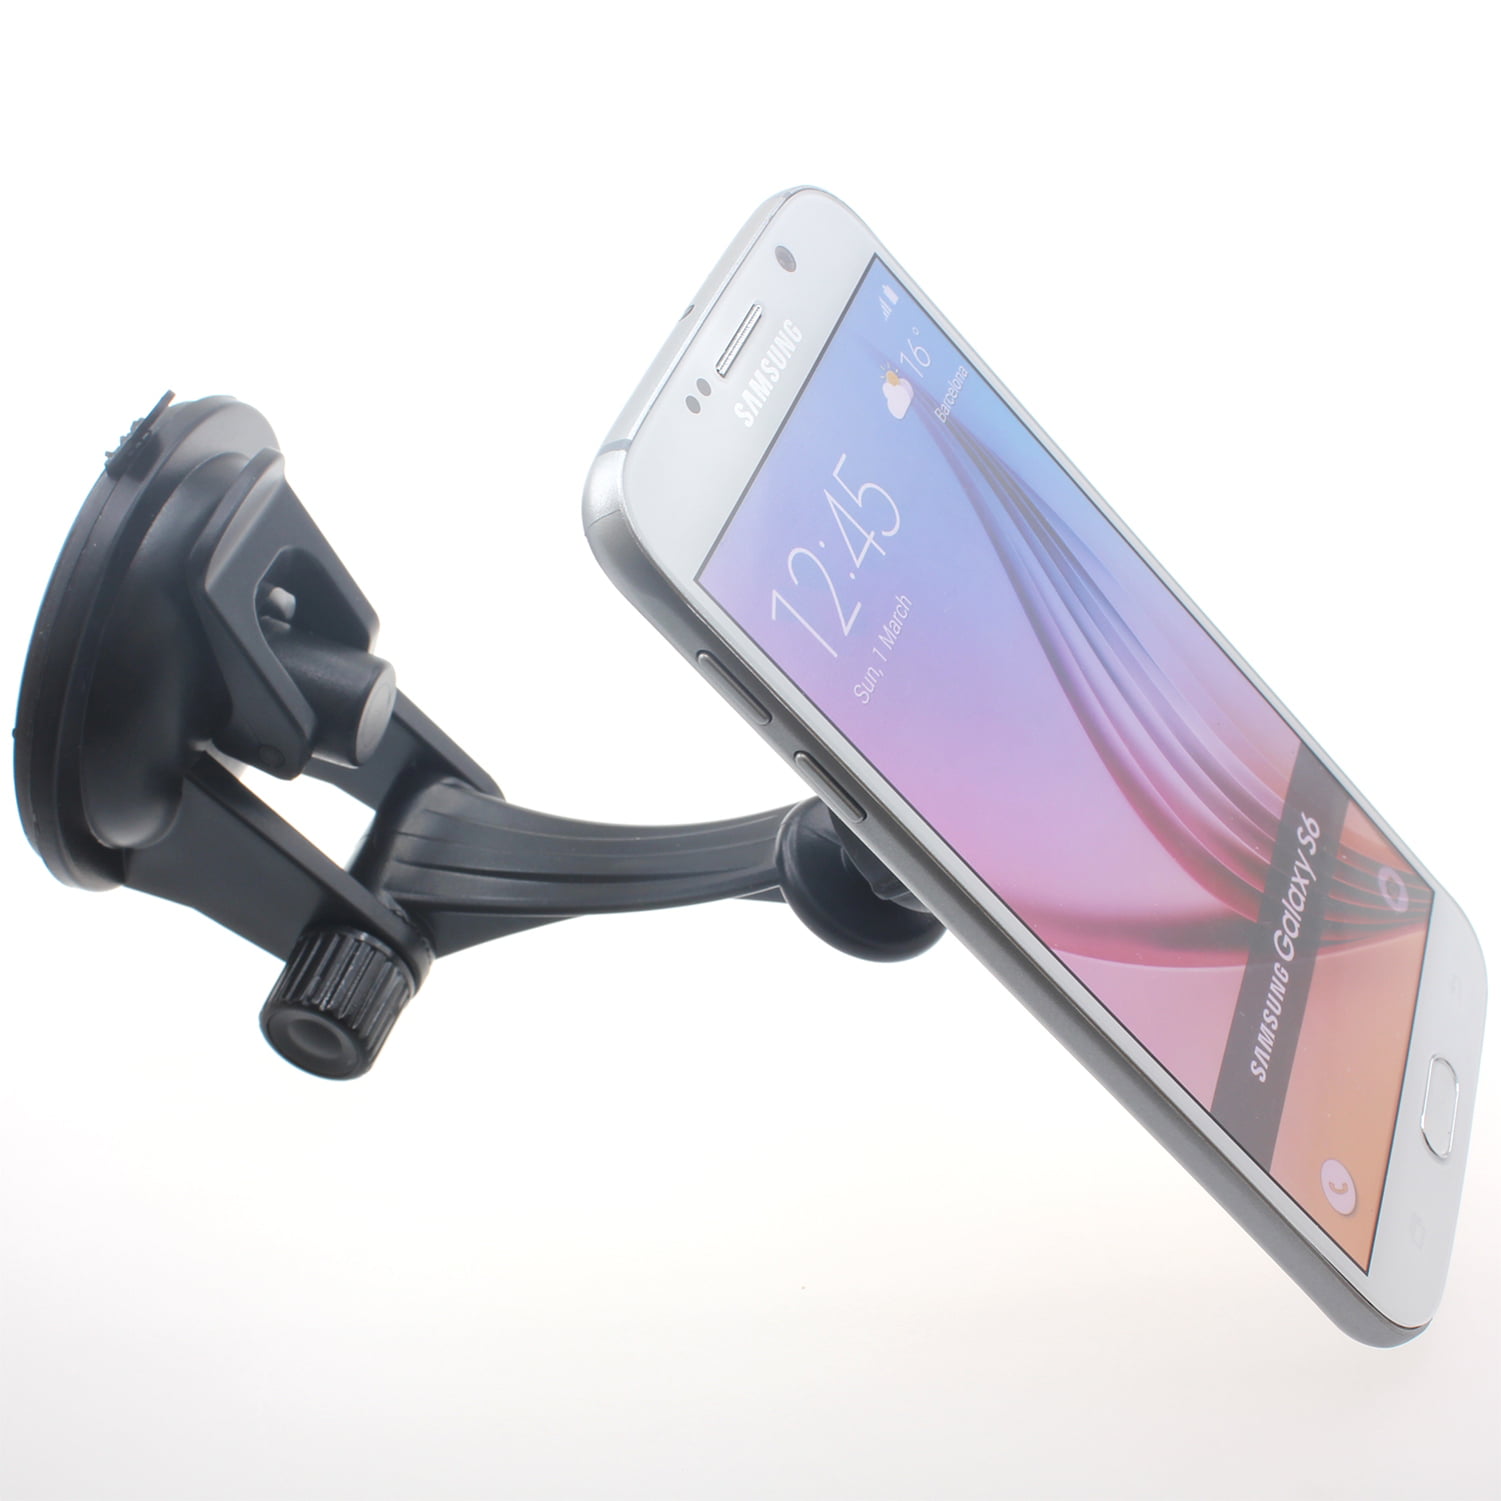 Windshield Dash Phone Holder Car Mount Grip for Google Pixel 3 Huawei OnePlus LG 